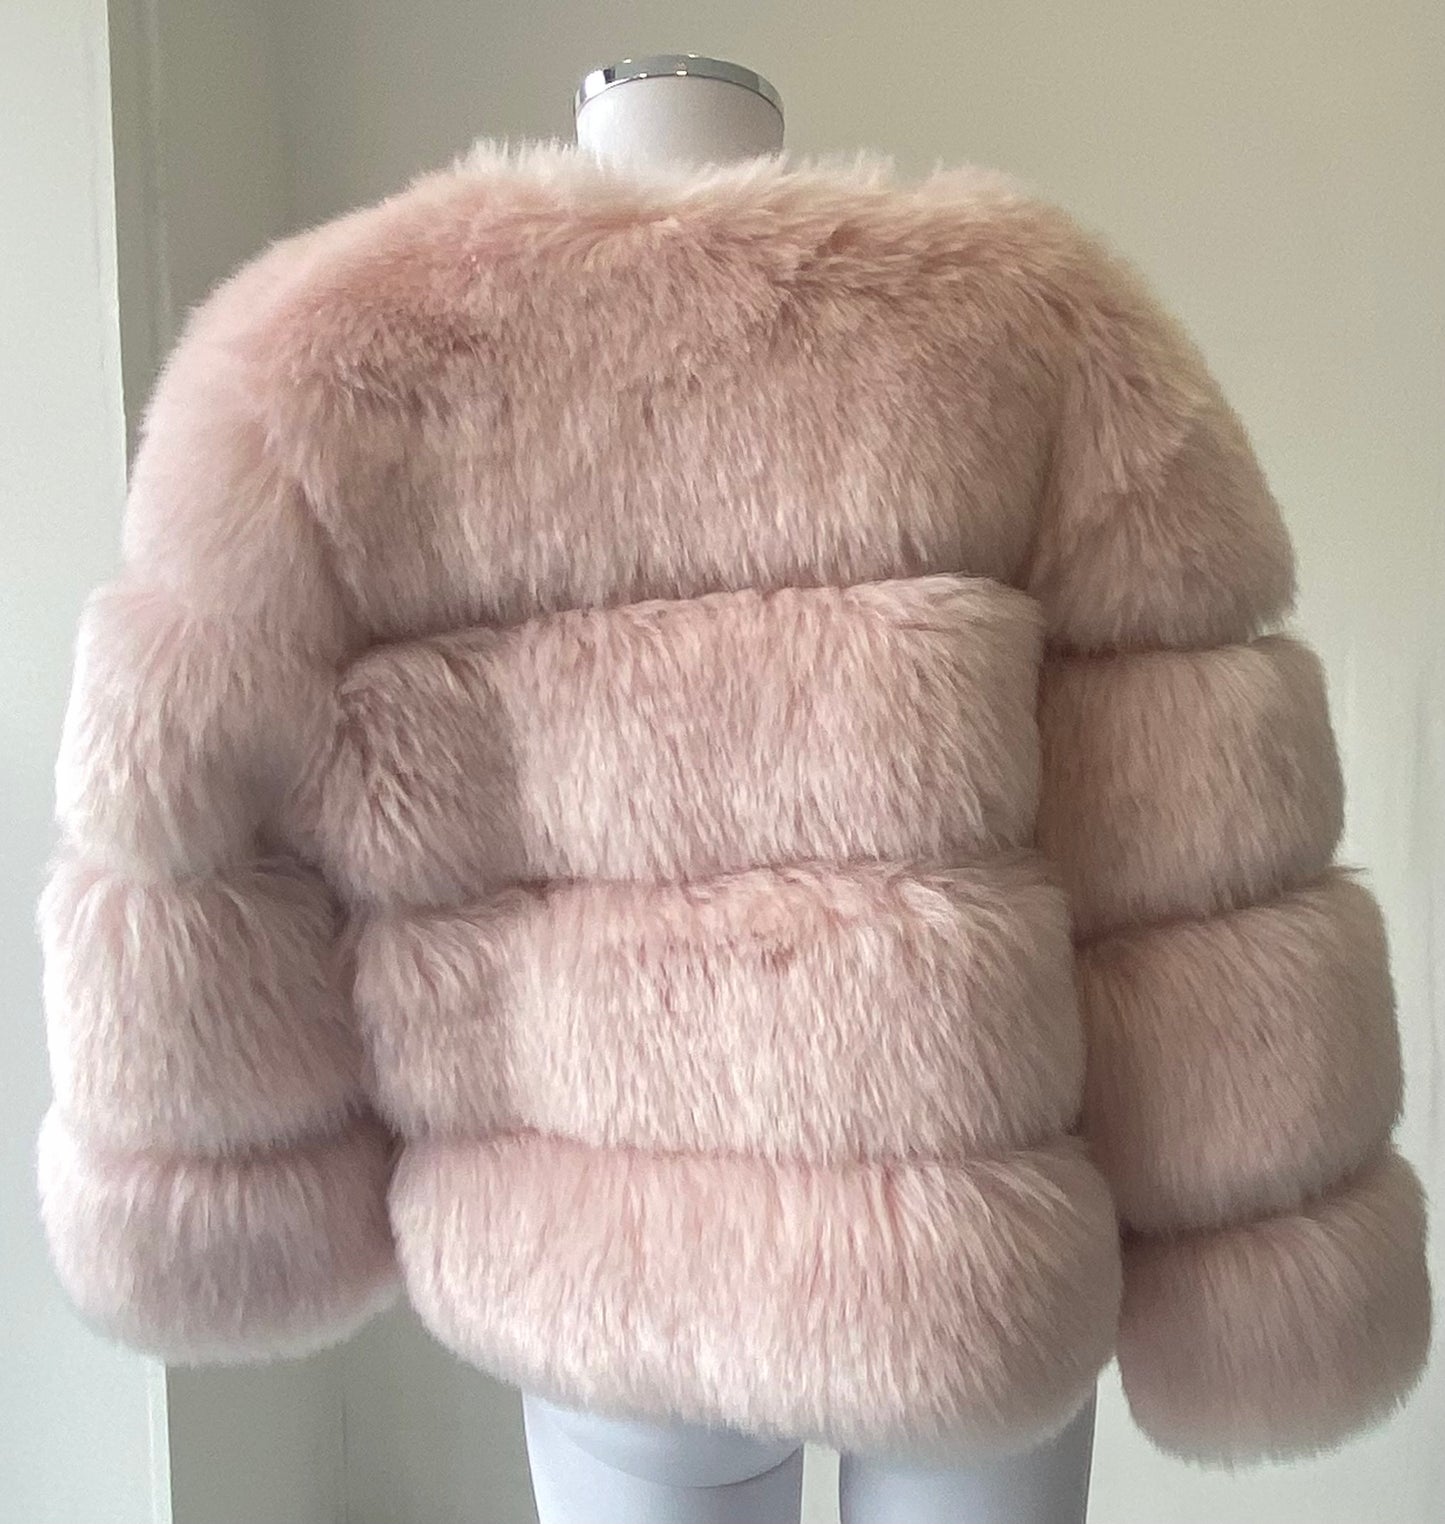 Popski London Pink Faux Fur Coat Size 8-12